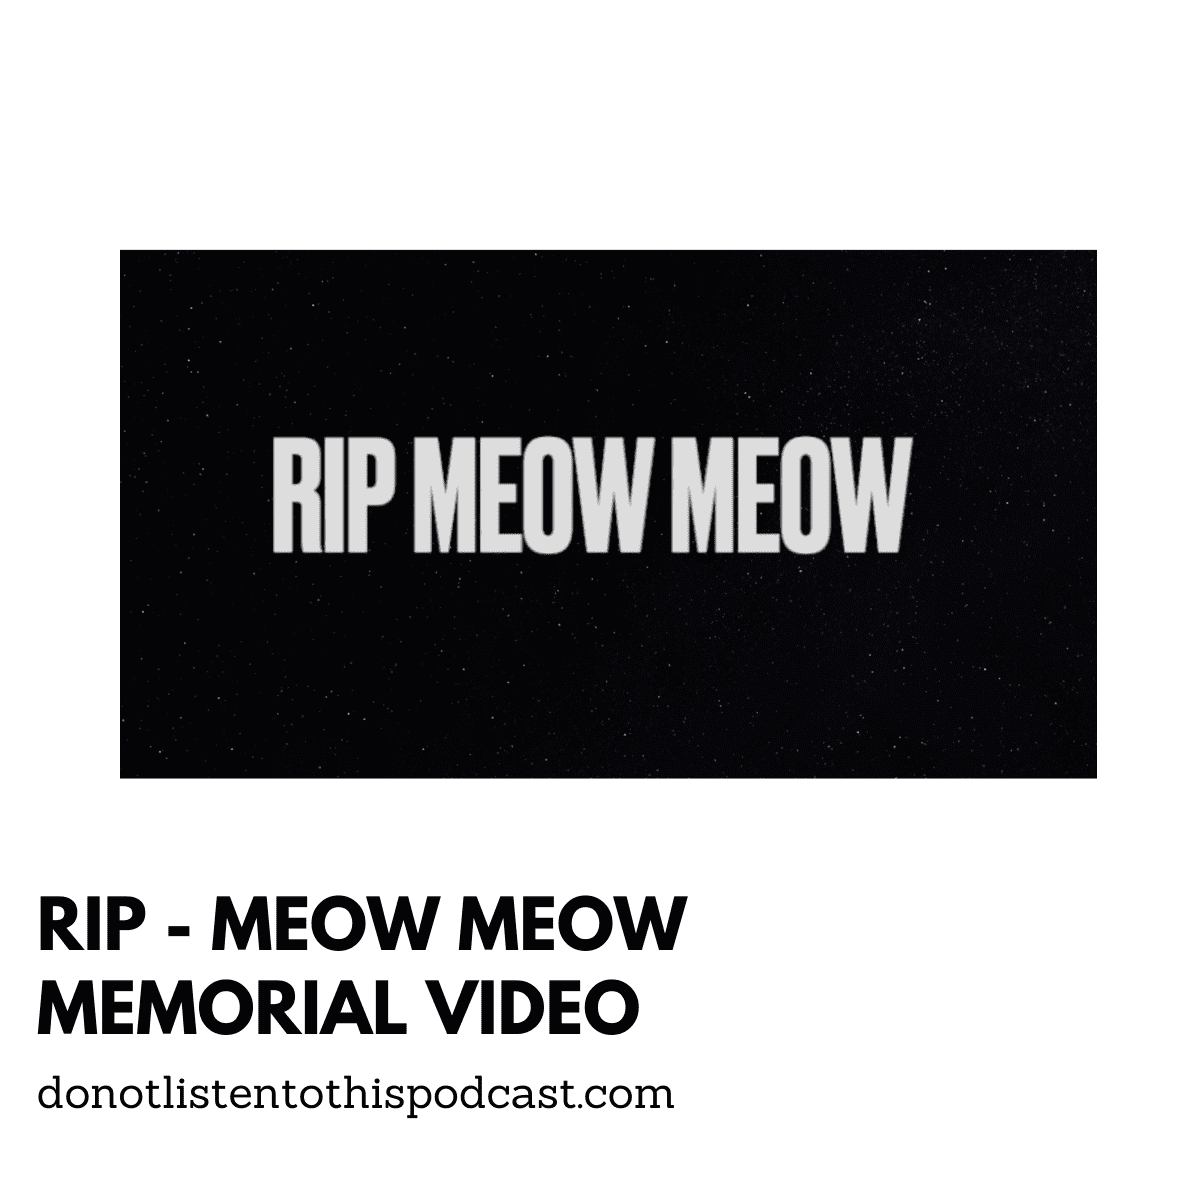 RIP Meow Meow Video